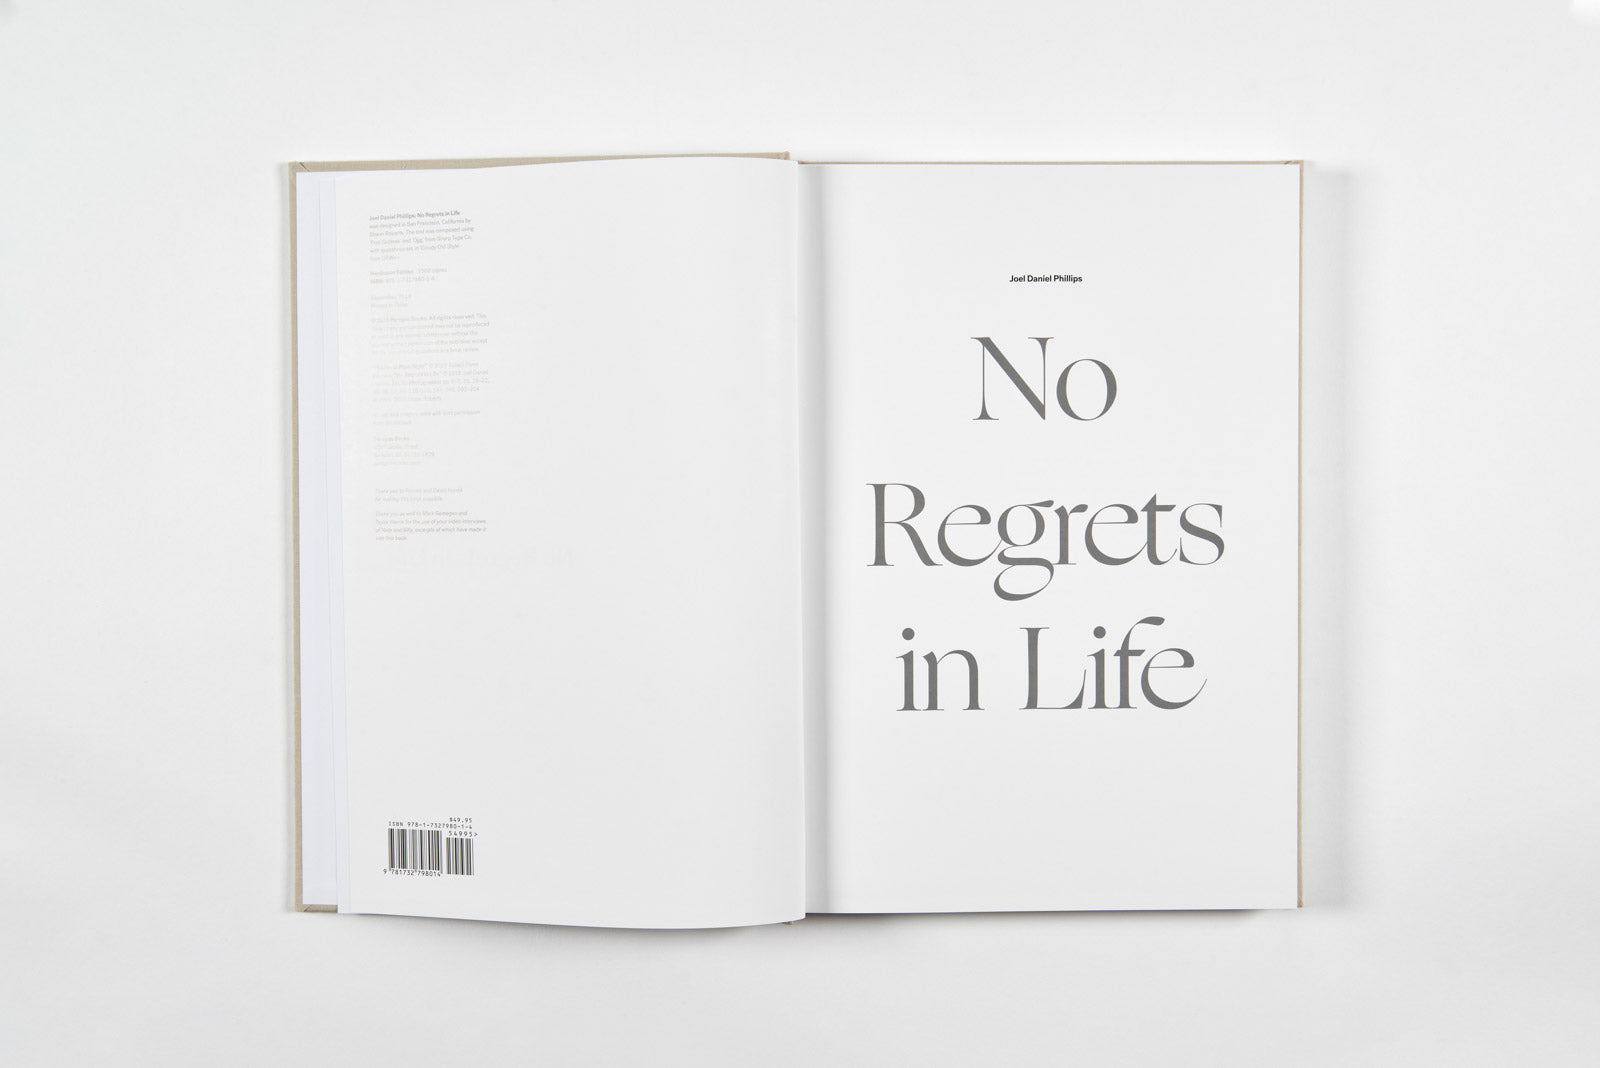 "No Regrets in Life"